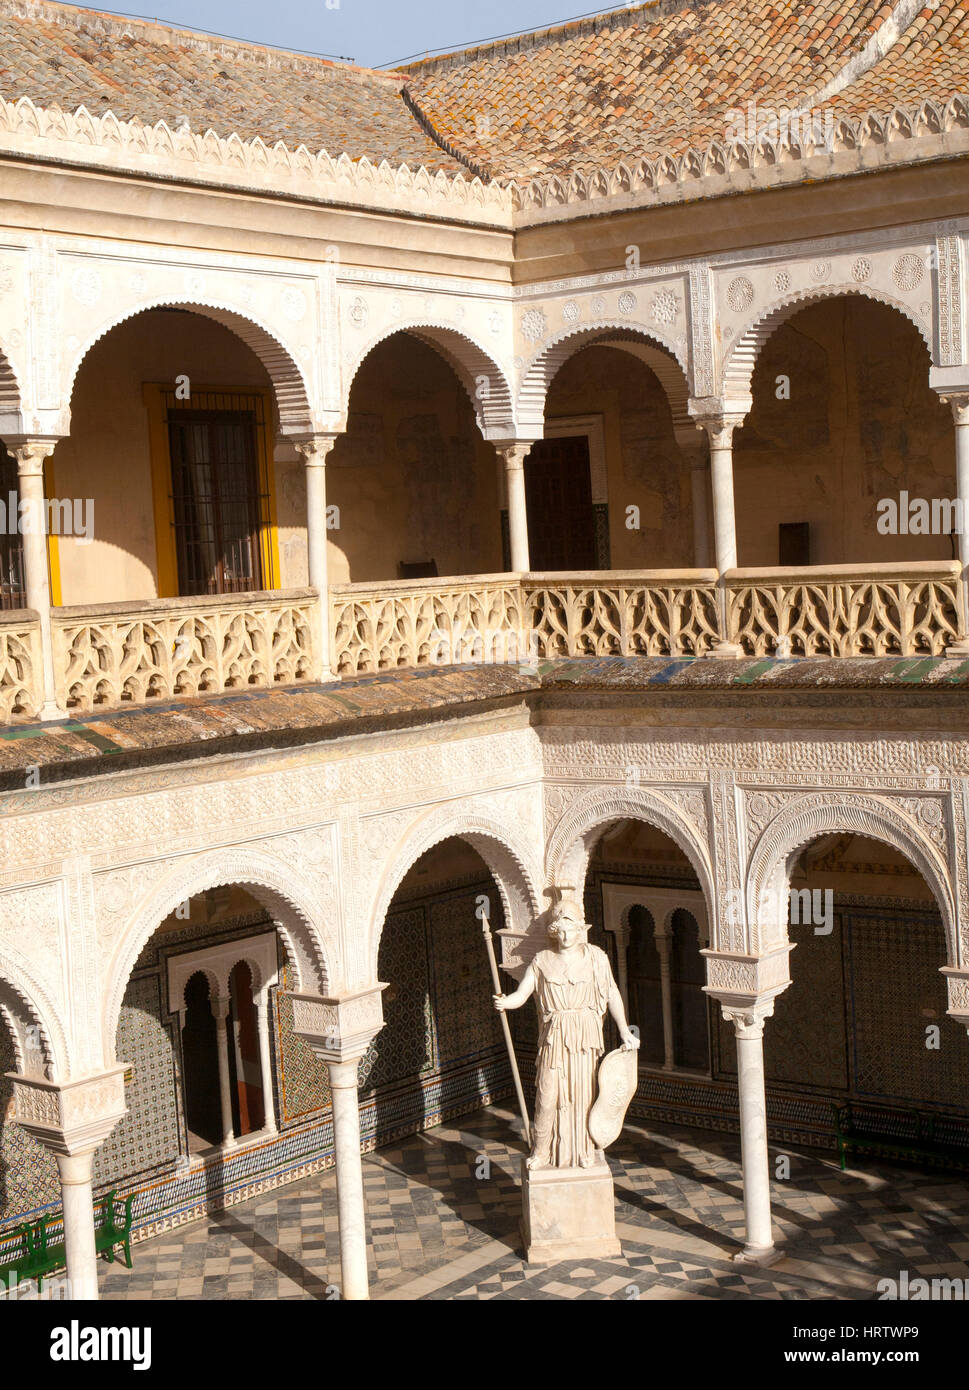 La Casa de Pilatos palace in city of Seville, Spain, Stock Photo